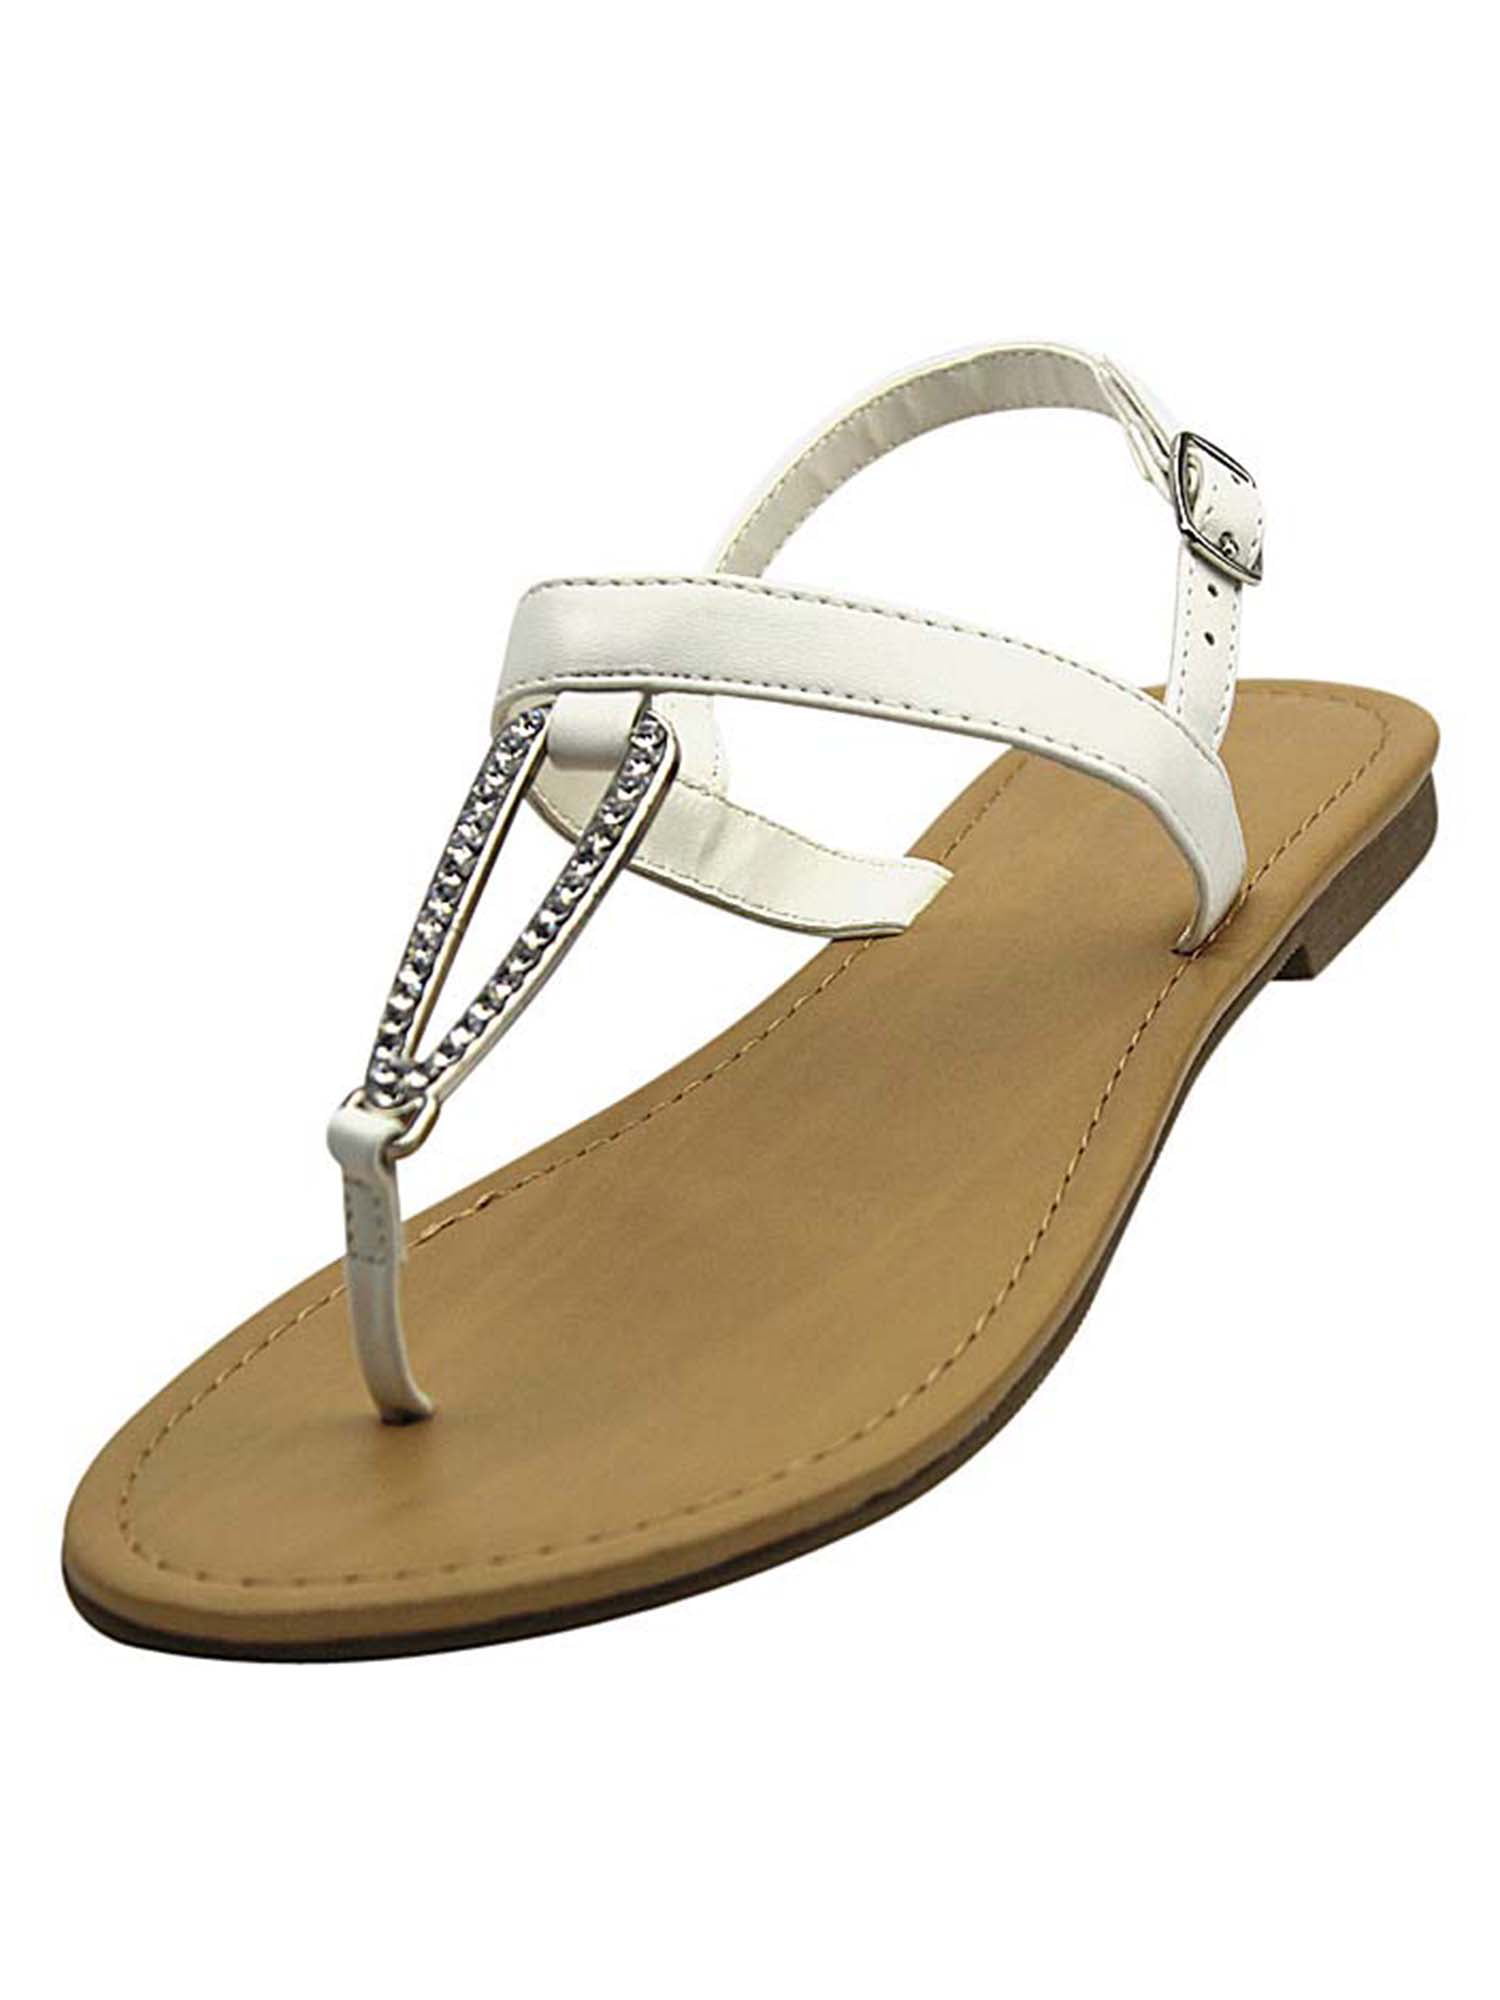 White Thong Womens Sandals With Rhinestone Buckle Size 7 - Walmart.com